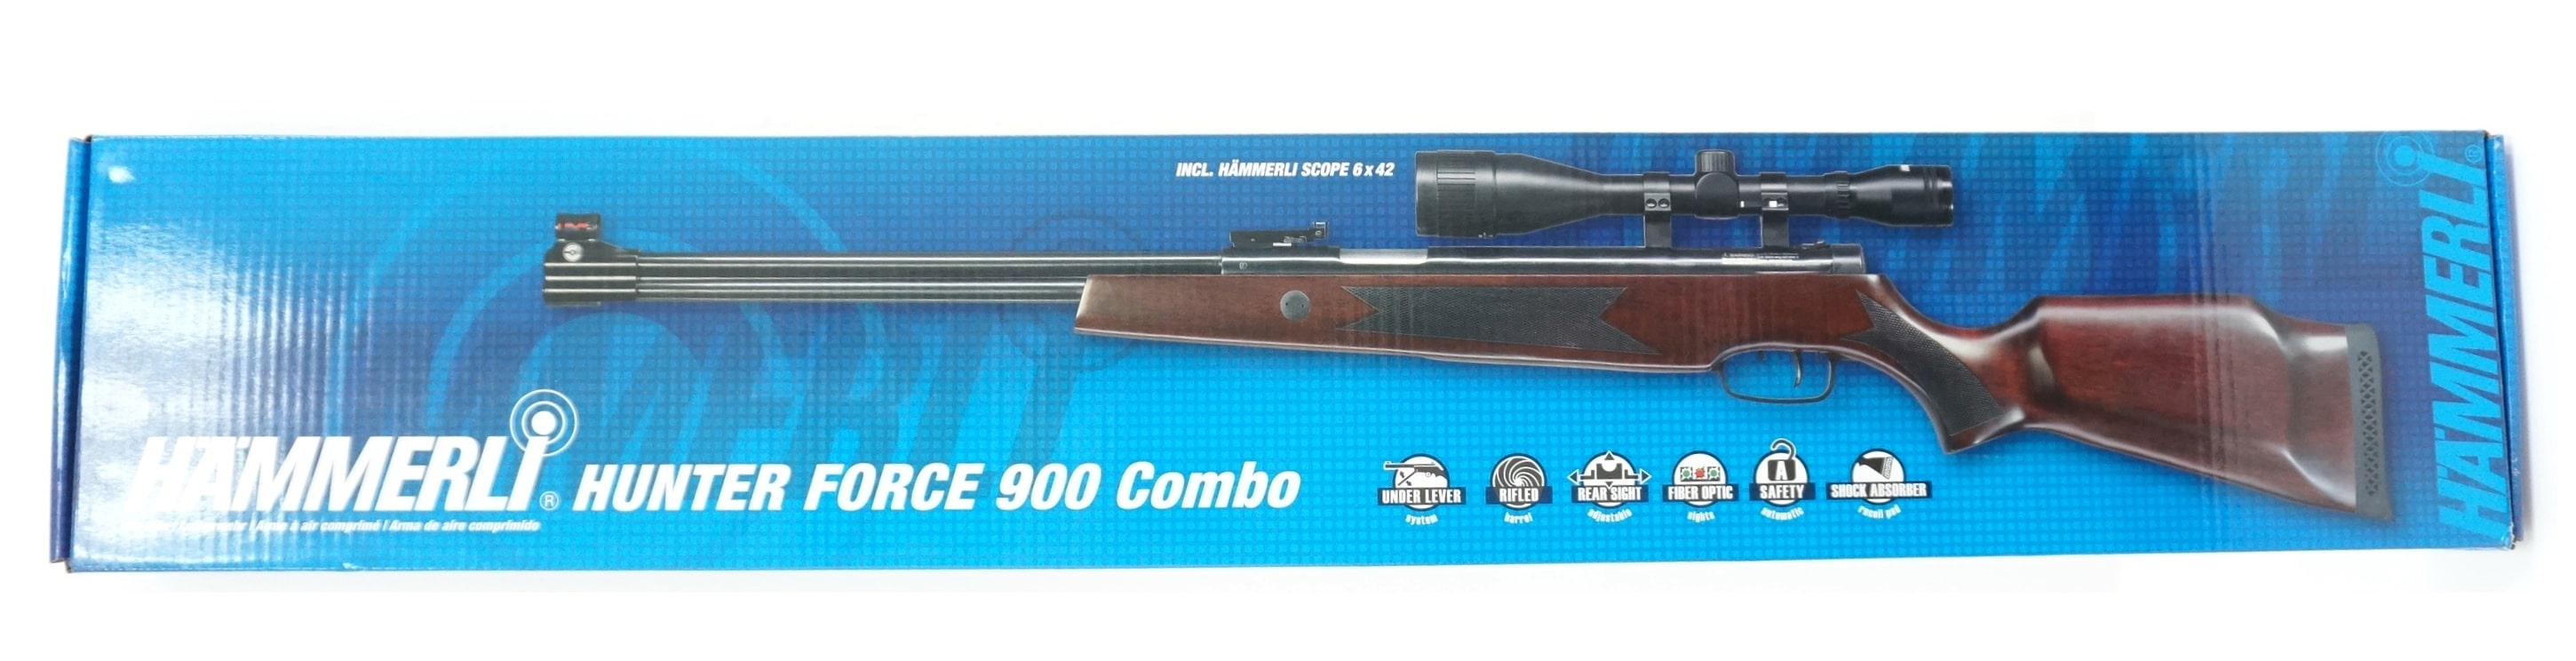 Пневматическая винтовка Umarex Hammerli Hunter Force 900 Combo, изображение 5